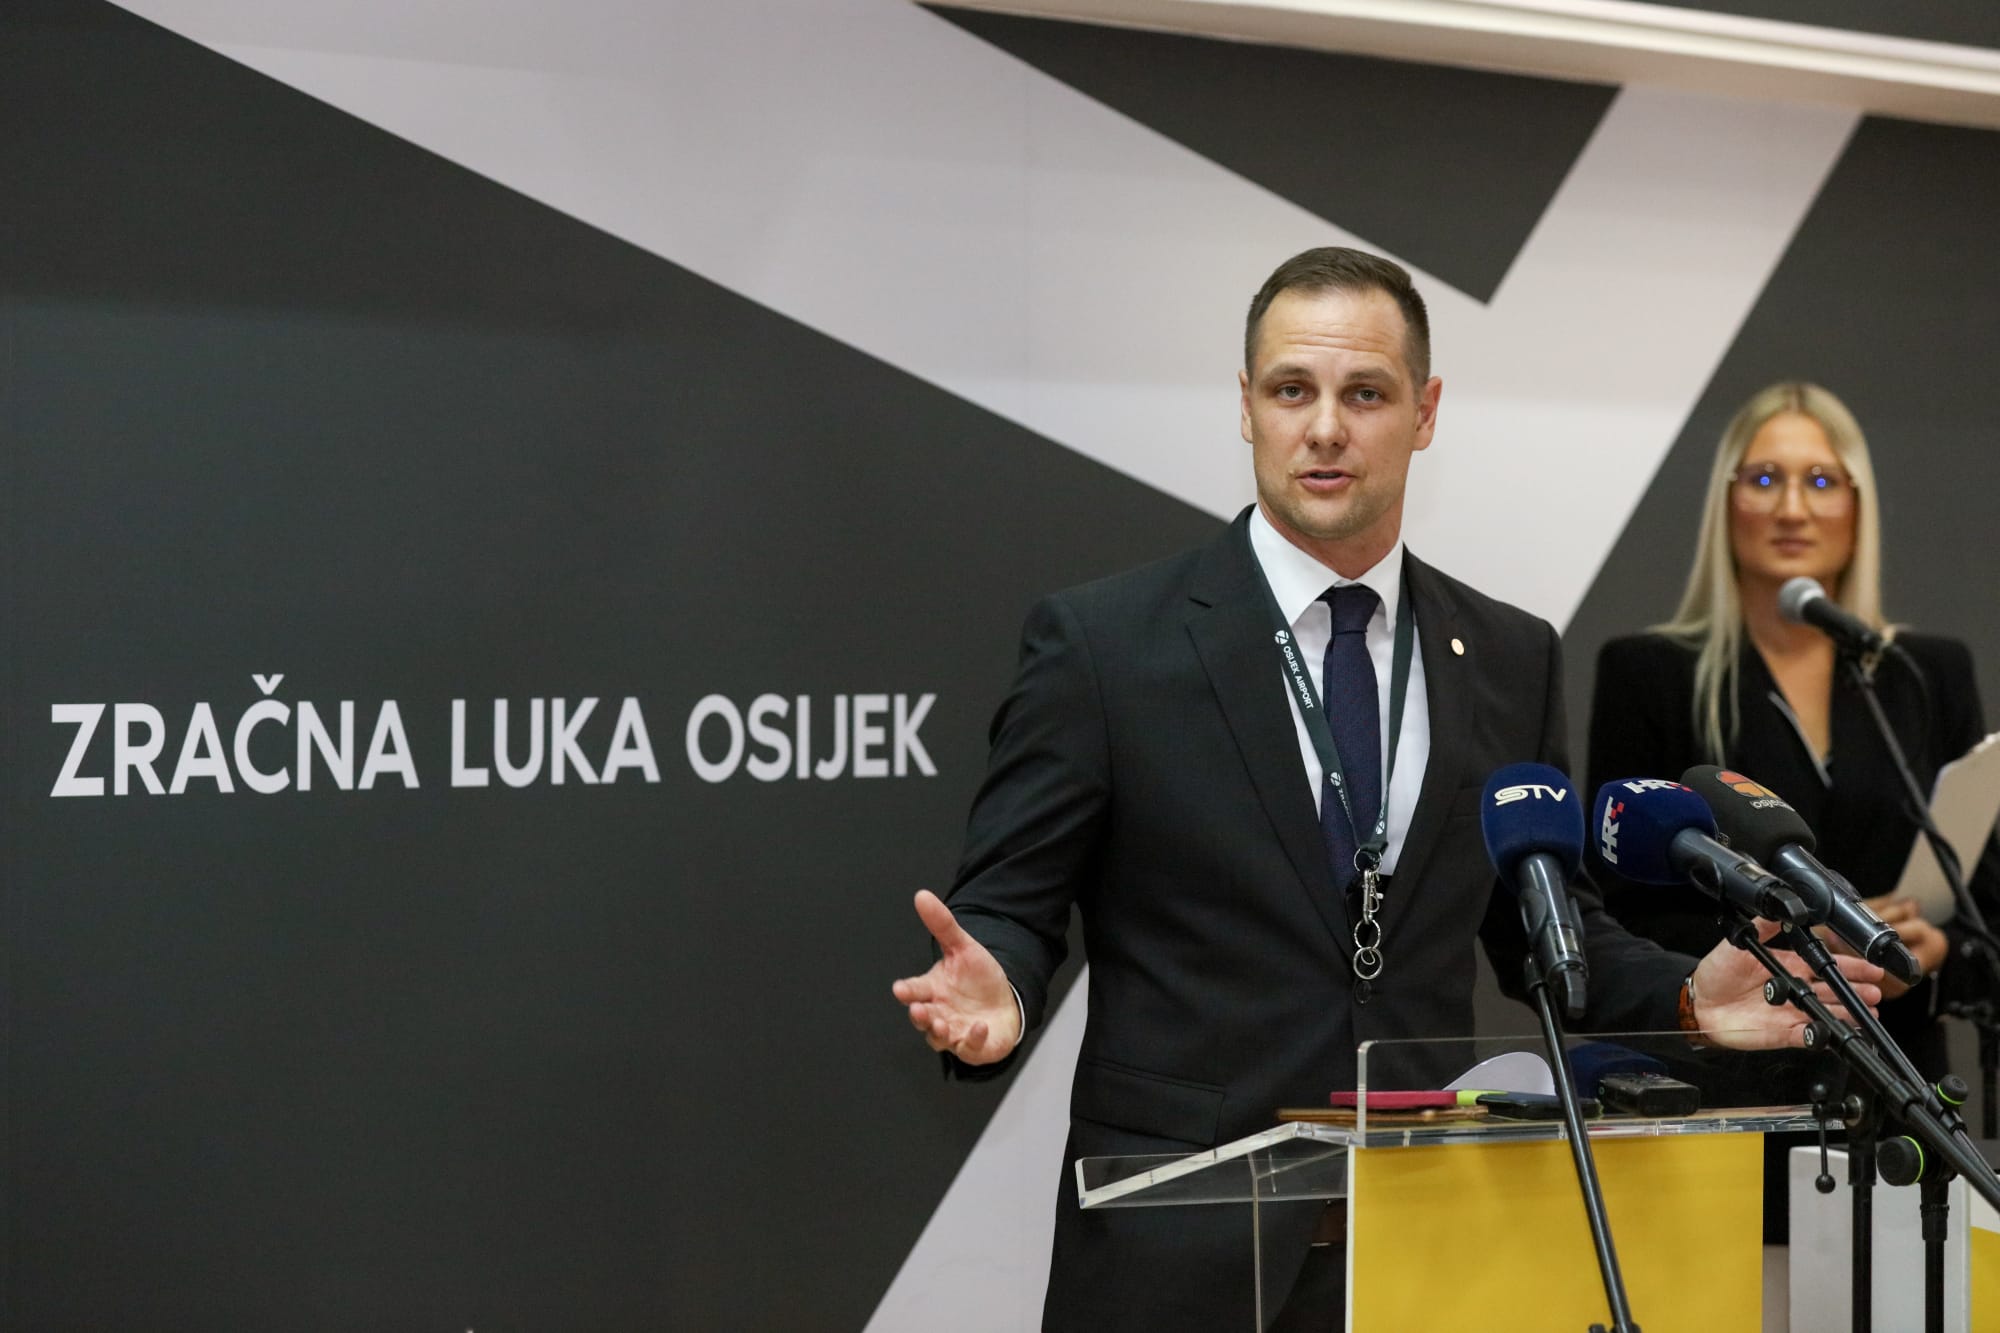 Major Milestone: €11.3 Million Passenger Terminal Construction Agreement Signed at Osijek Airport